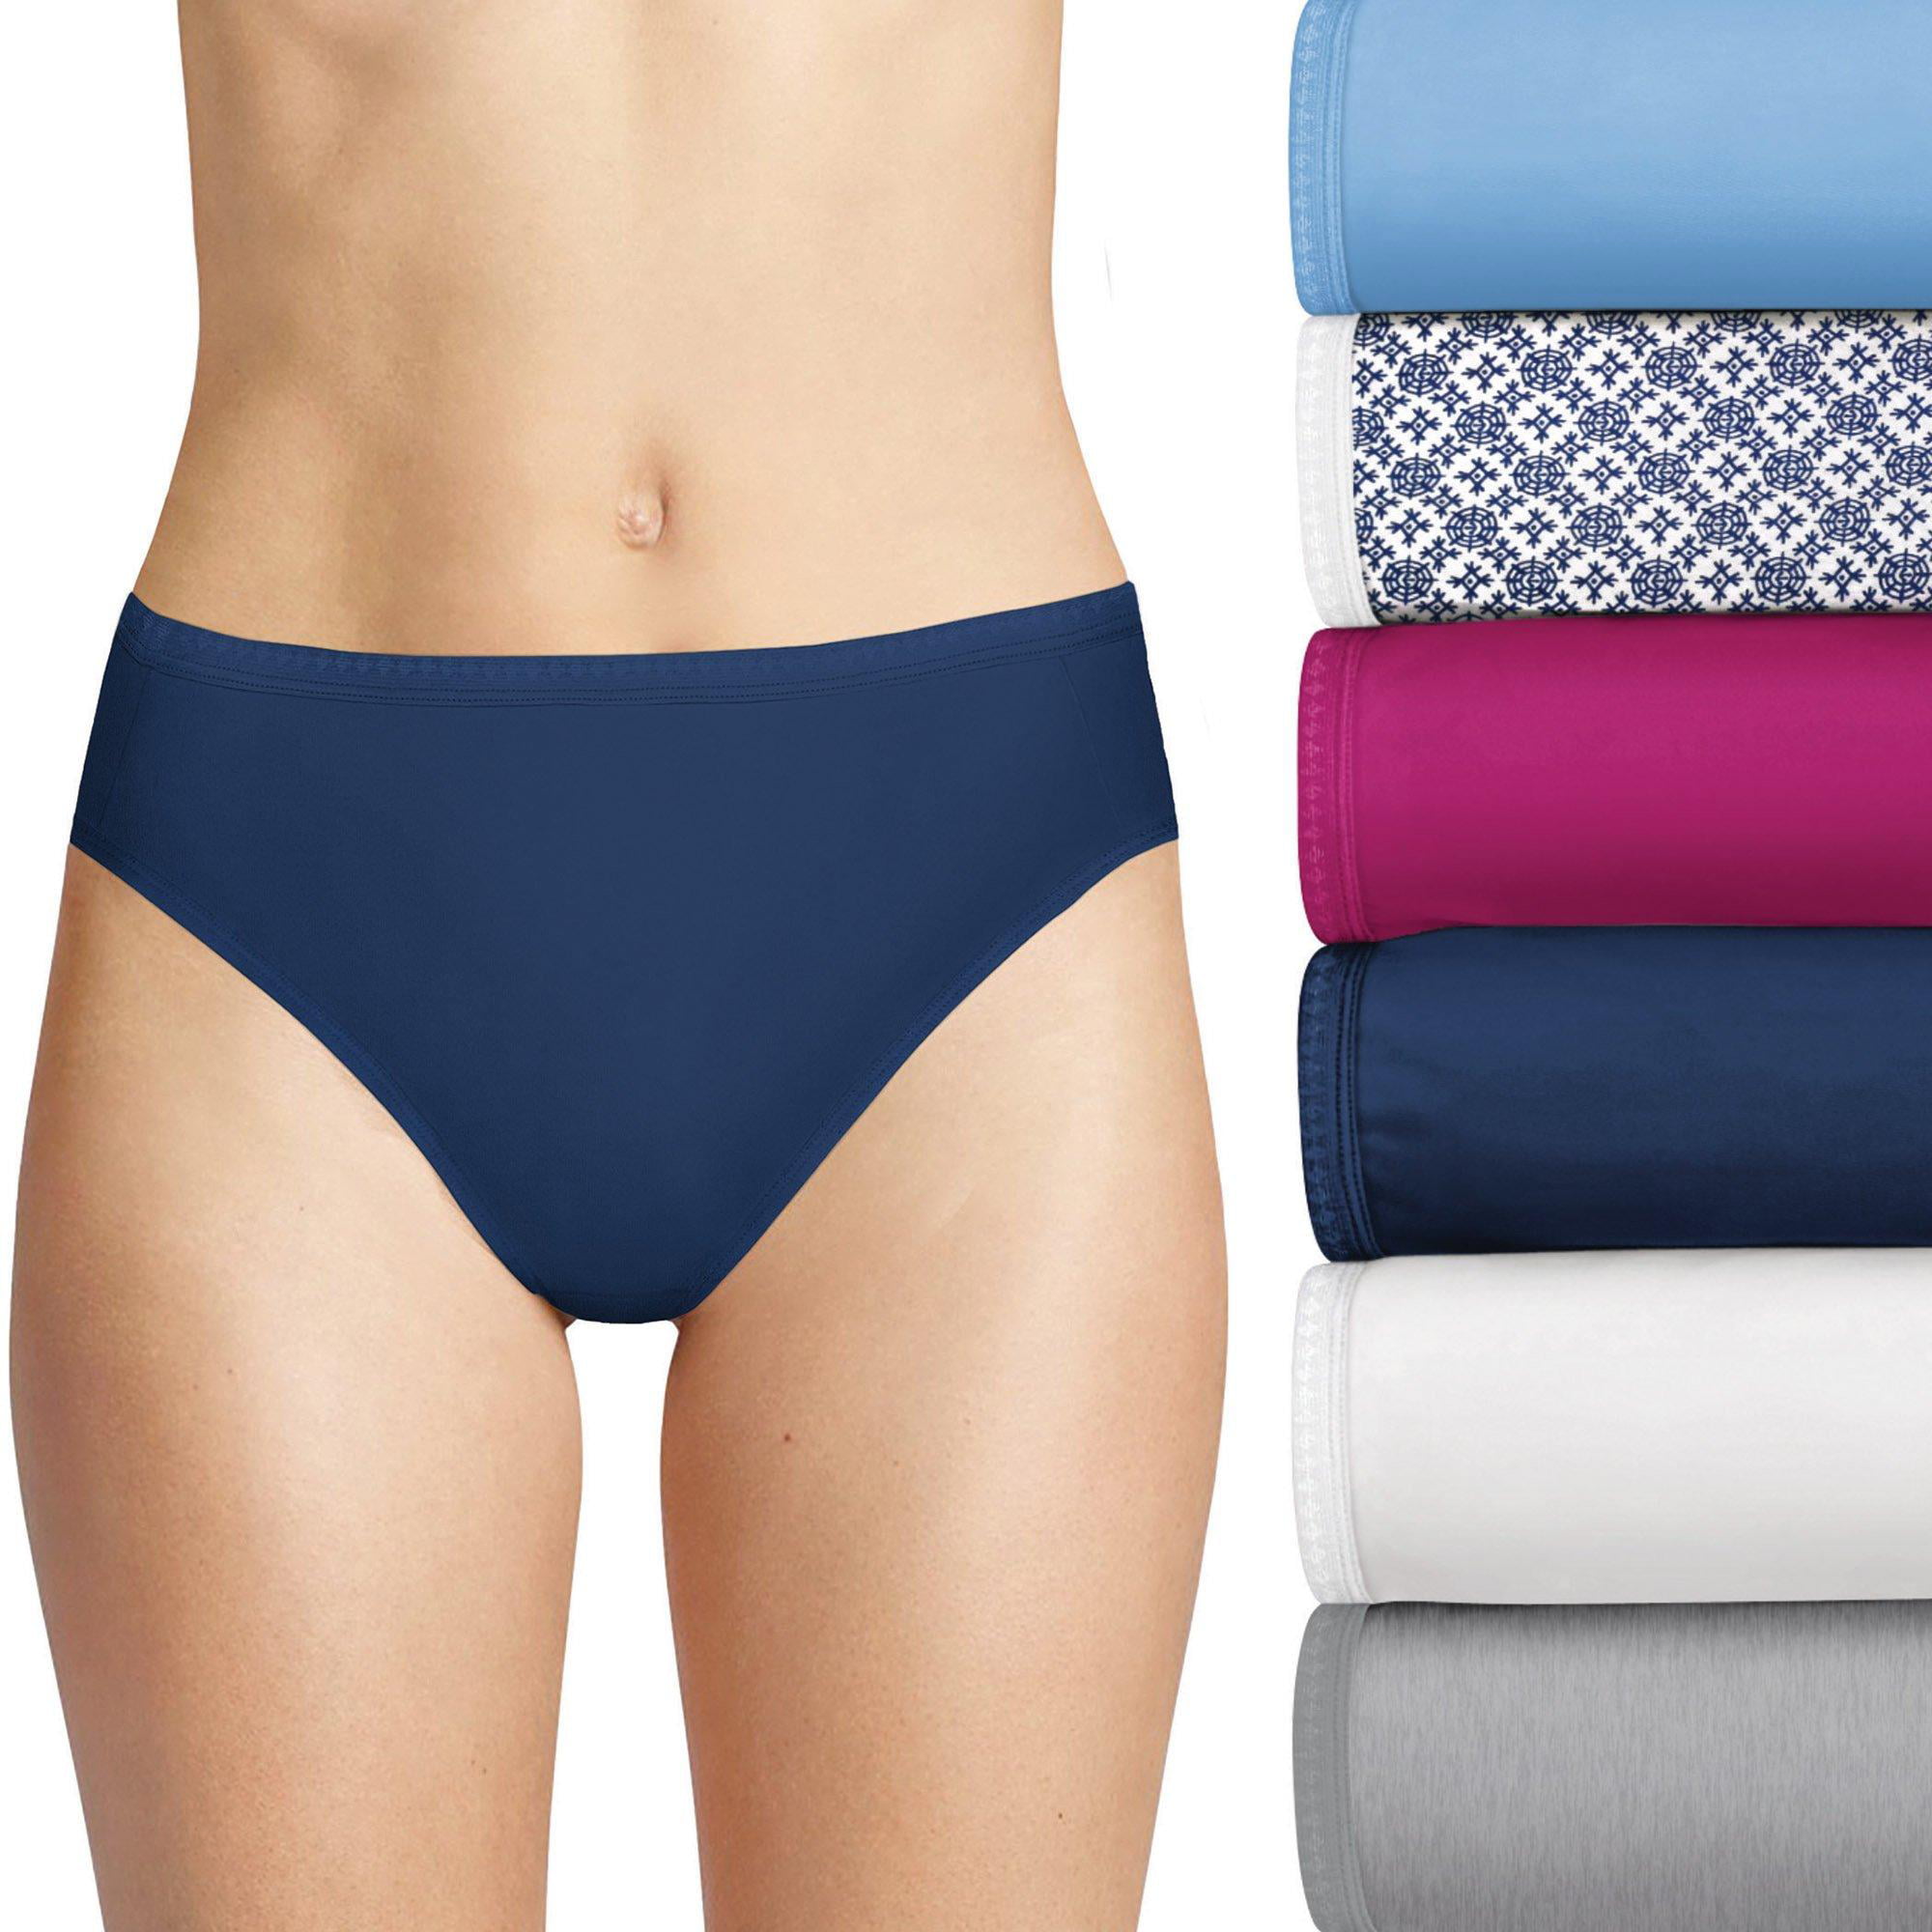 Hanes Women's 6pk Hi-Cut Underwear PP43WB - Blue/Purple/White 9 6 ct